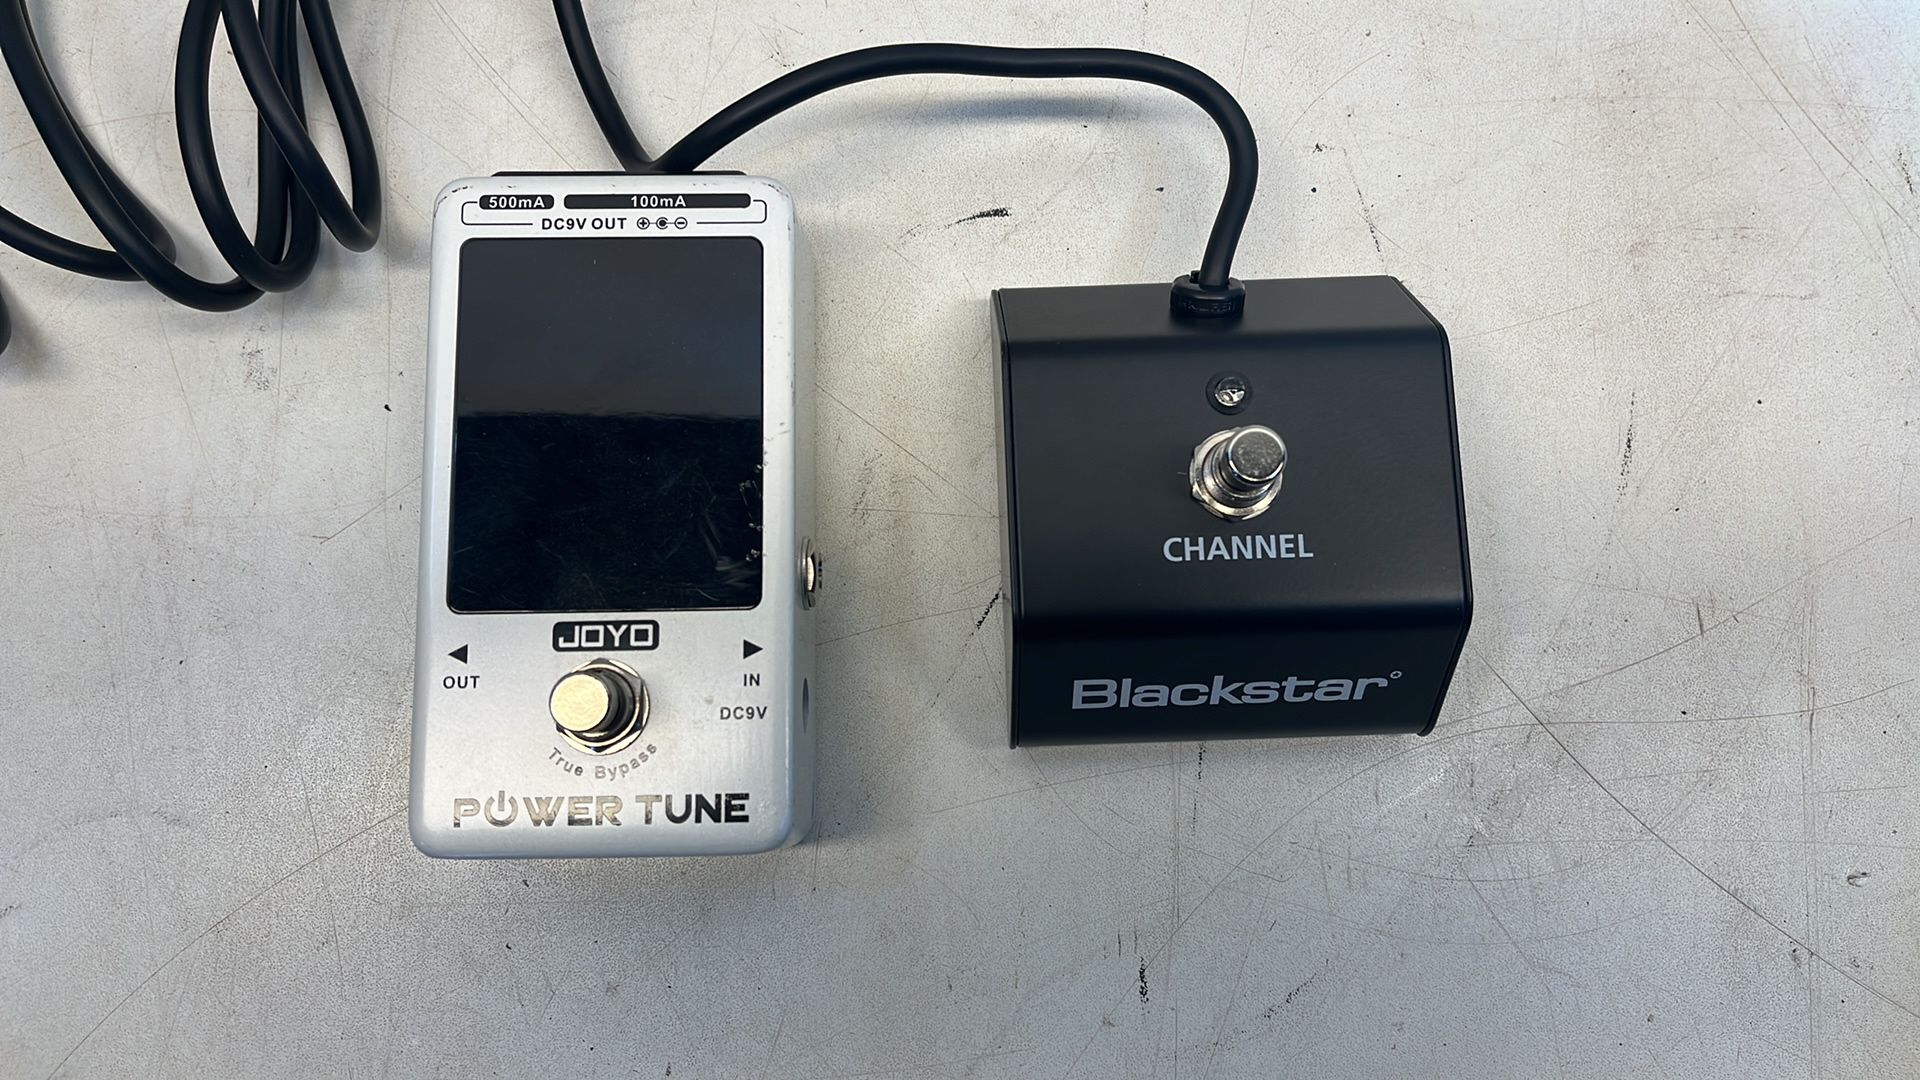 Blackstar Channel tuner & Joyo Power Tuner